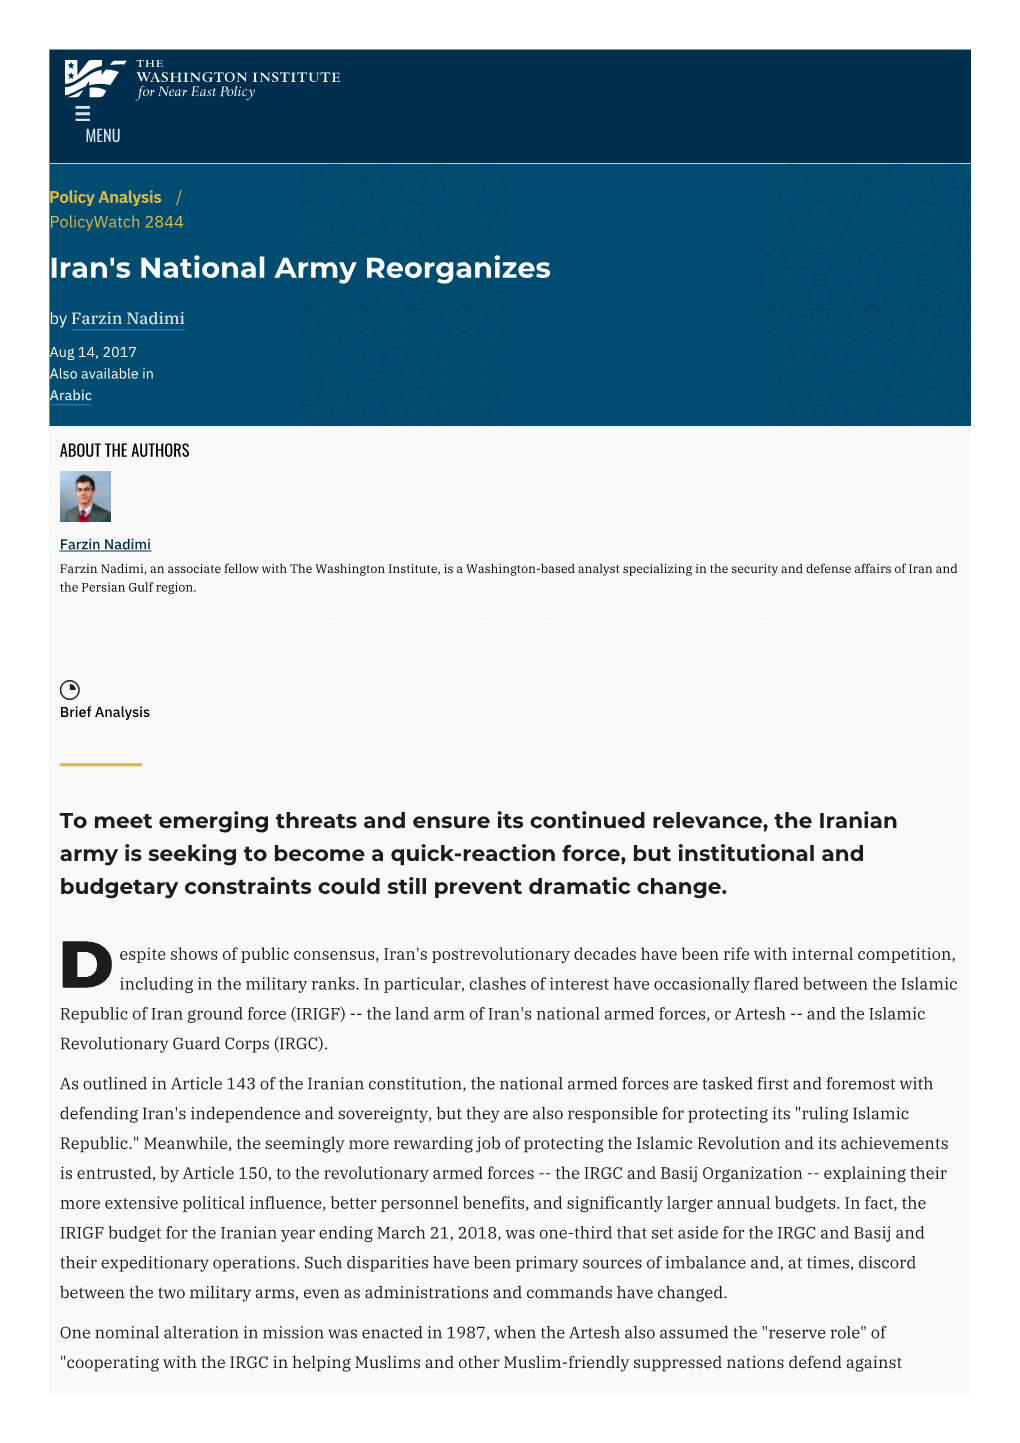 Iran's National Army Reorganizes | the Washington Institute